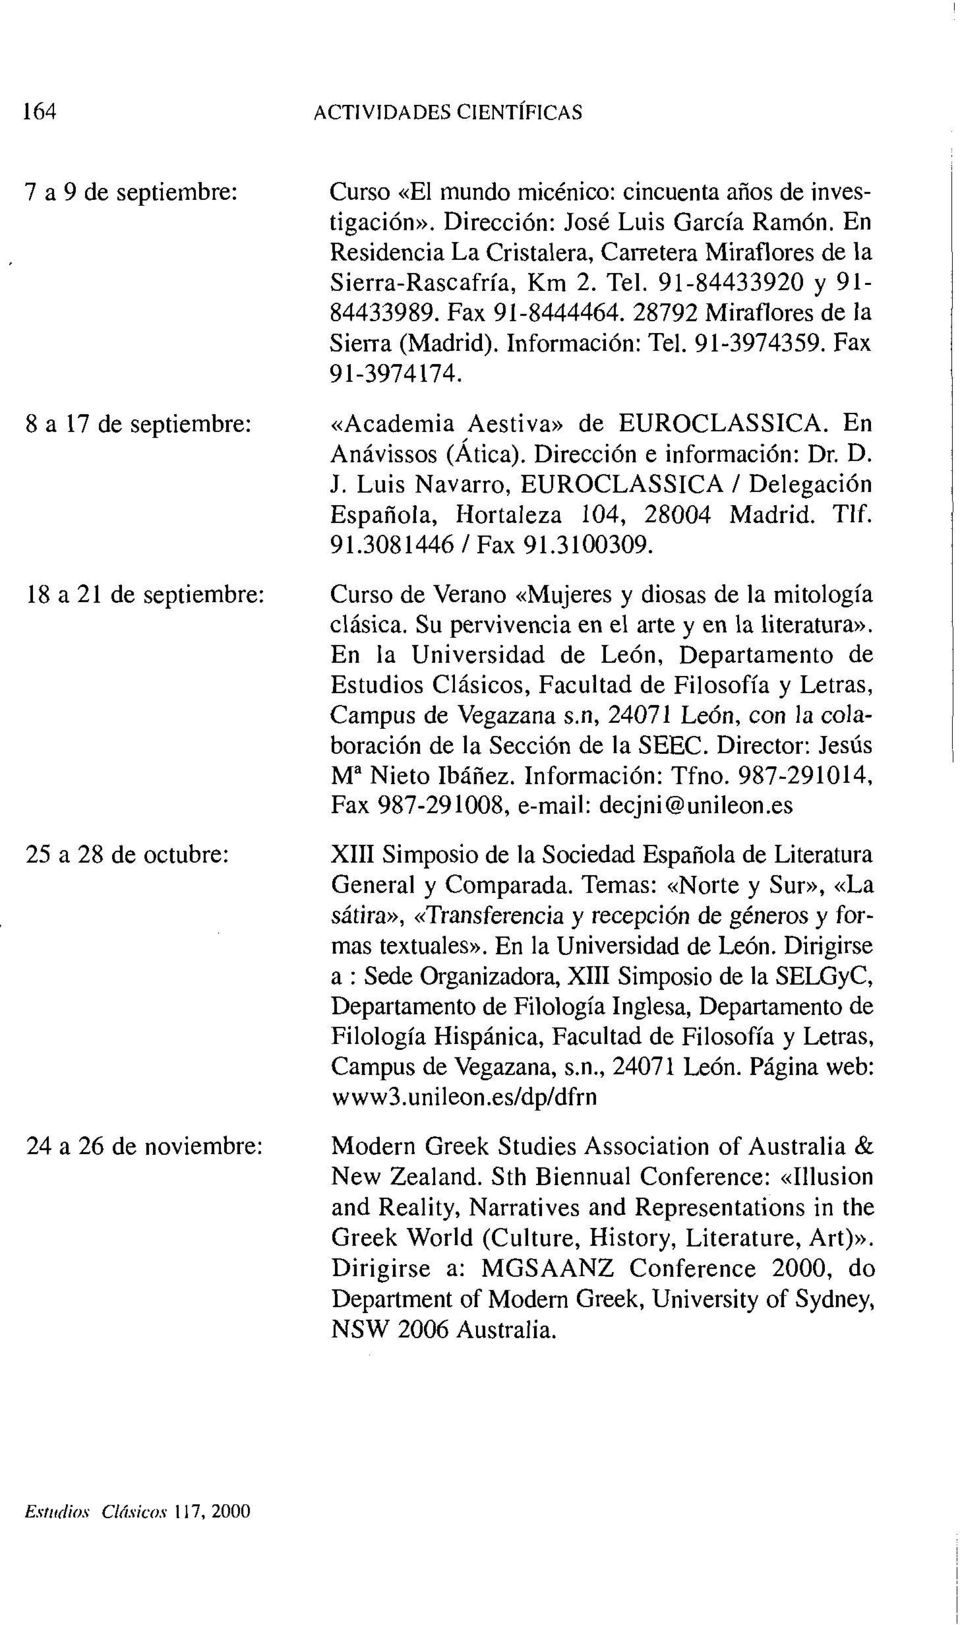 En Anávissos (Ática). Dirección e información: Dr. D. J. Luis Navarro, EUROCLASSICA 1 Delegación Española, Hortaleza 104, 28004 Madrid. Tlf. 91.3081446 1 Fax 91.3100309.